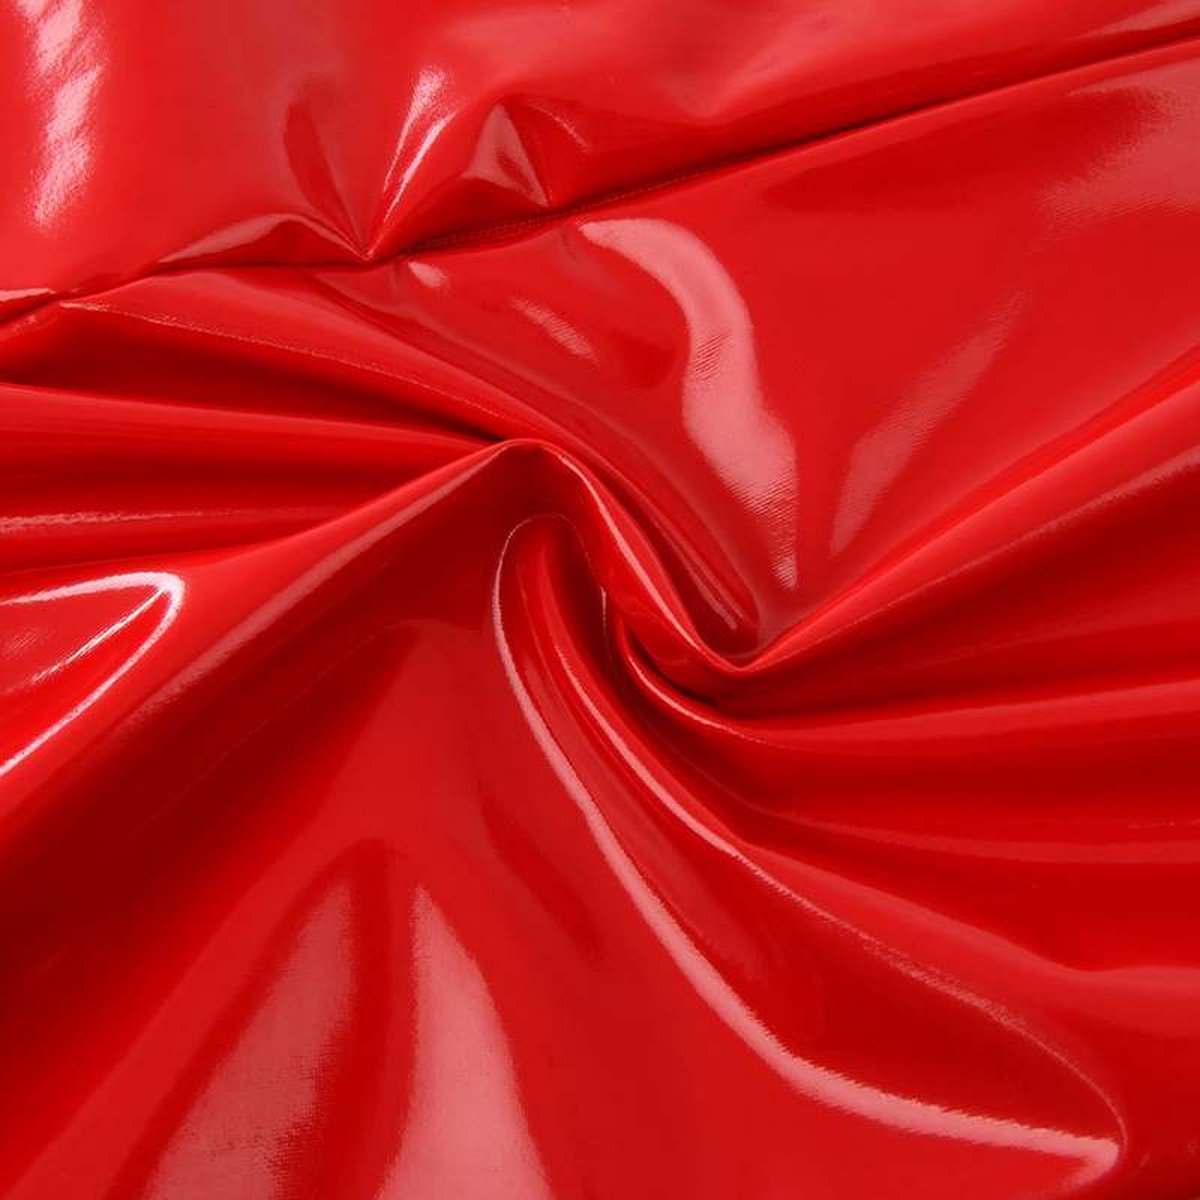 Robe rouge - aspect latex - simili cuir - féminine et provocante | bol